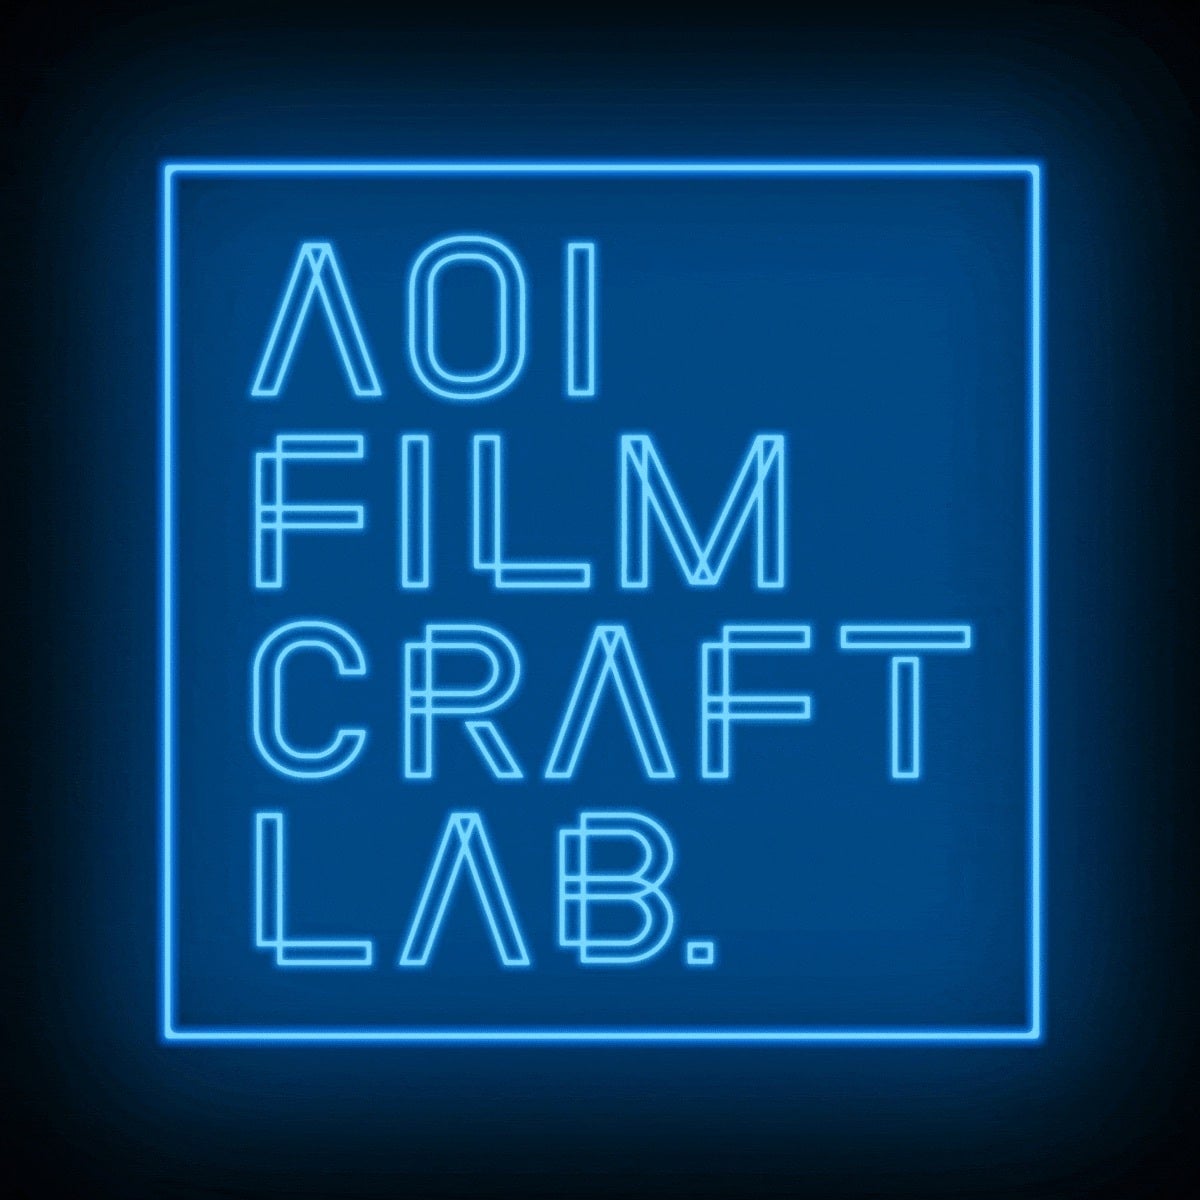 Aoi Film Craft Lab Aoi Film Craft Lab